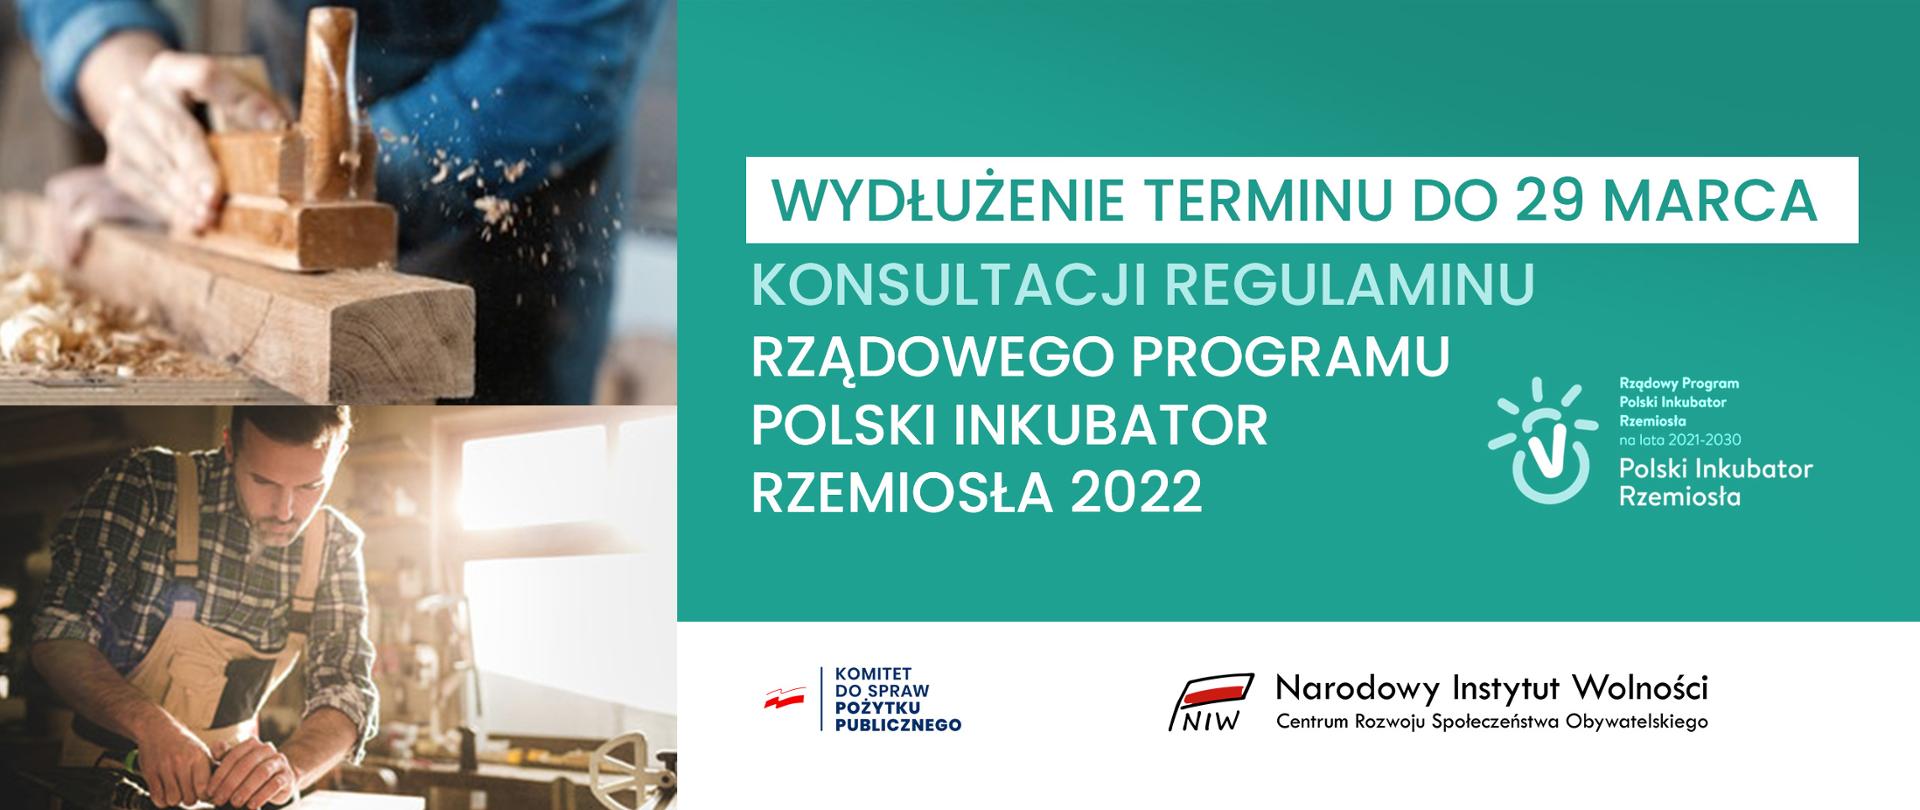 Konsultacje społeczne Regulaminu Konkursu Polski Inkubator Rzemiosła 2022